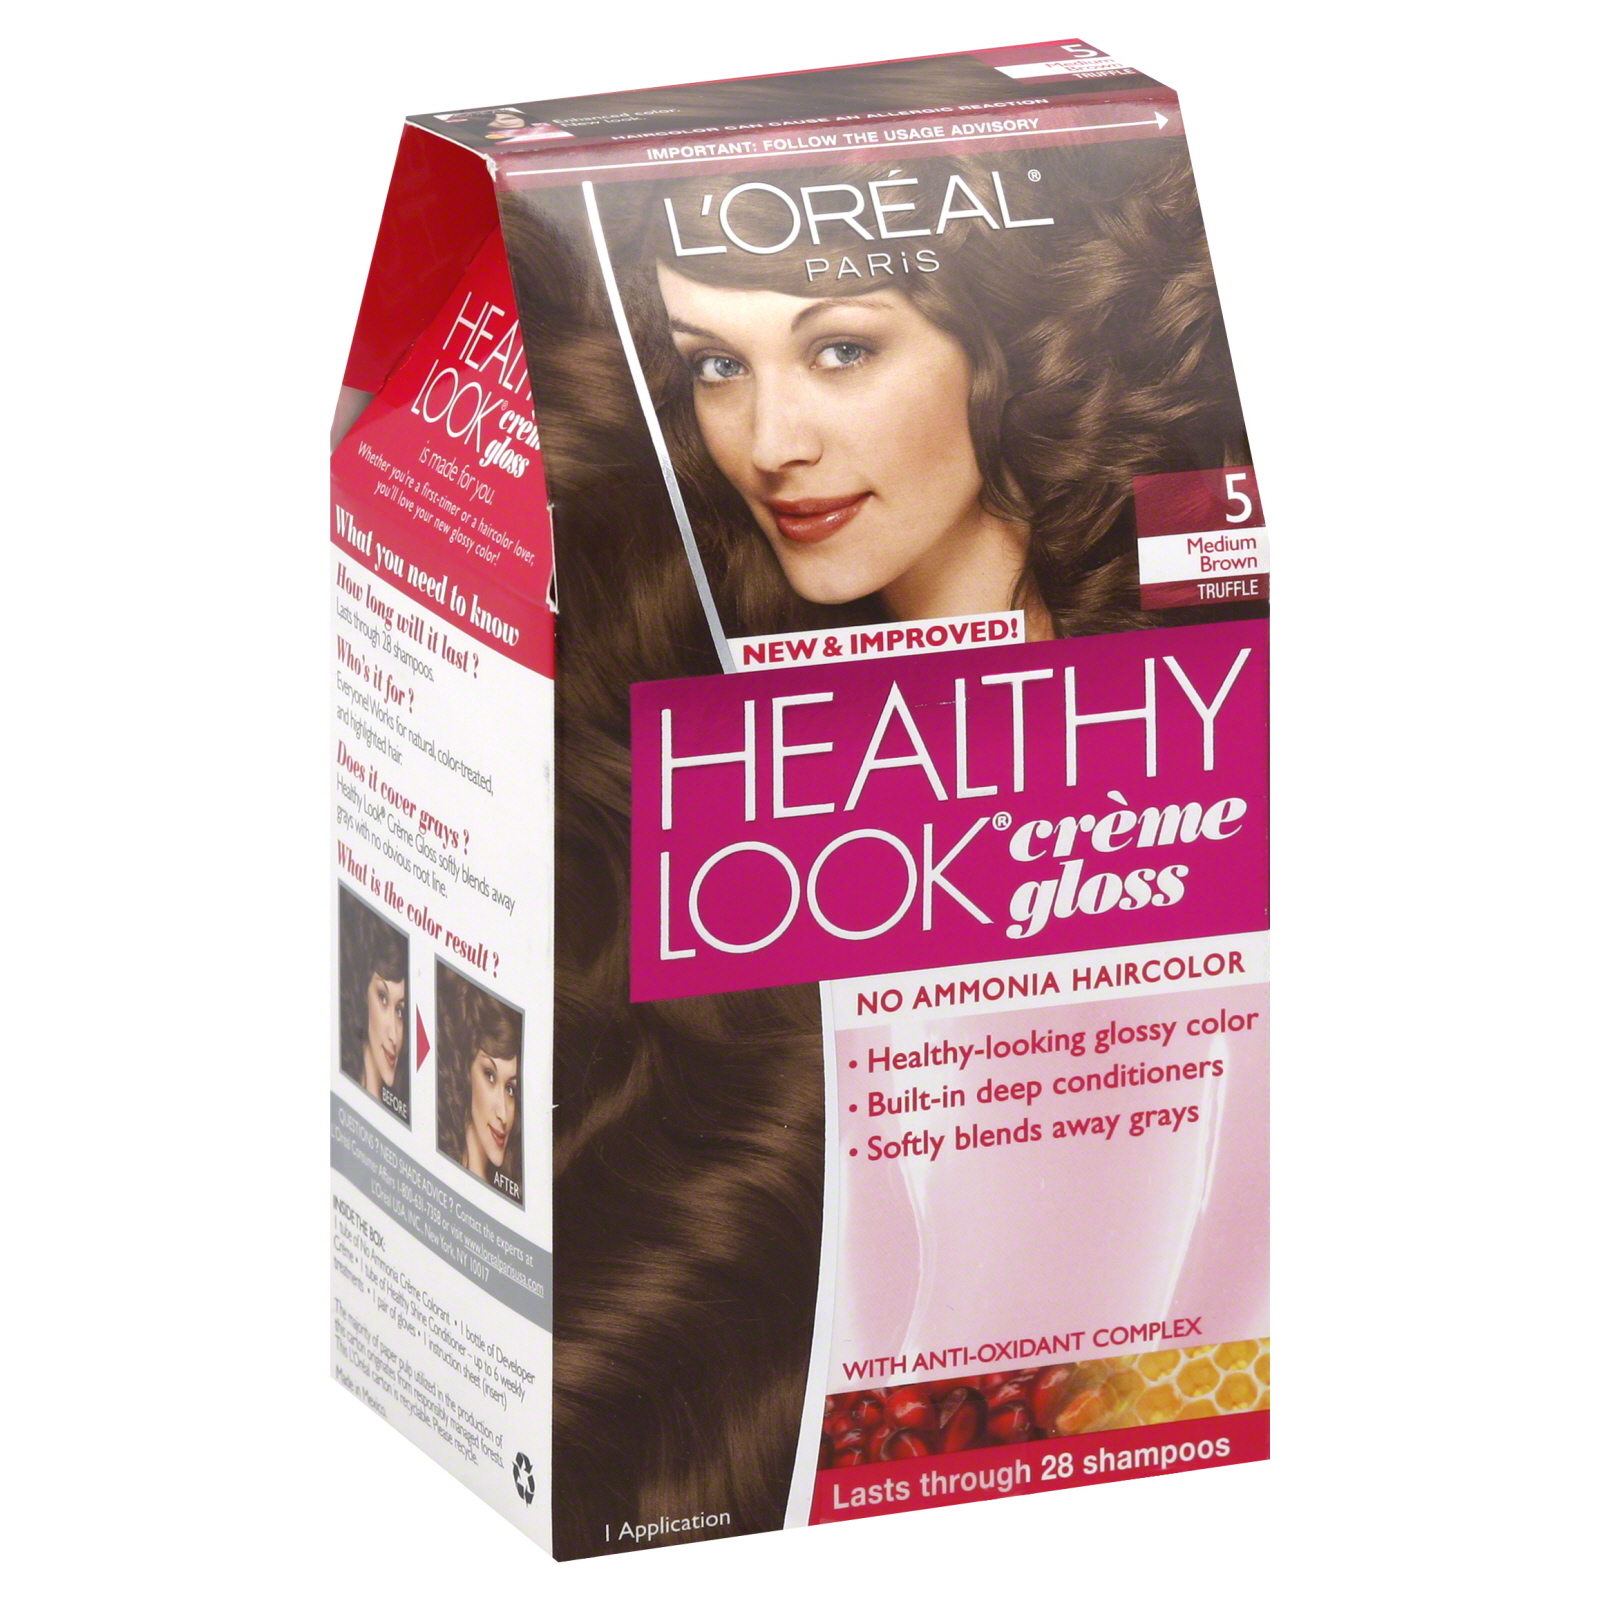 L'Oreal Healthy Look Hair Dye, Creme Gloss Color, Medium Brown 5, 1 application